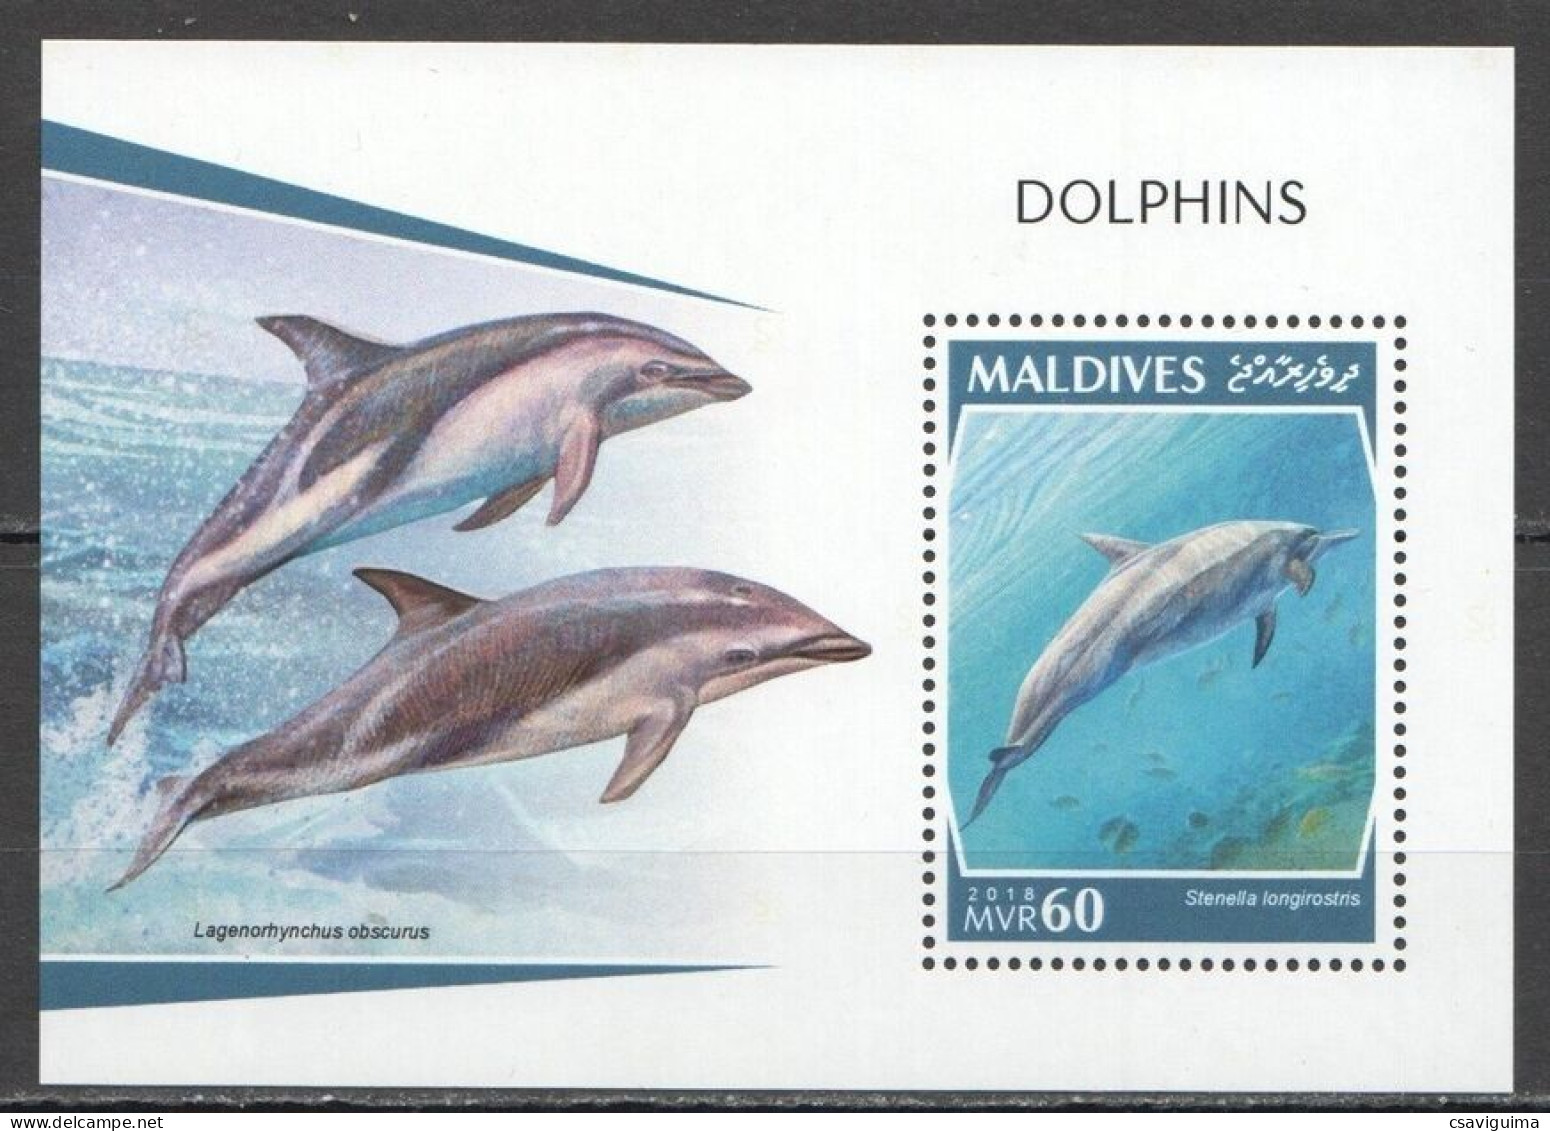 Maldives - 2018 - Dolphins - Yv Bf 1259 - Delfines